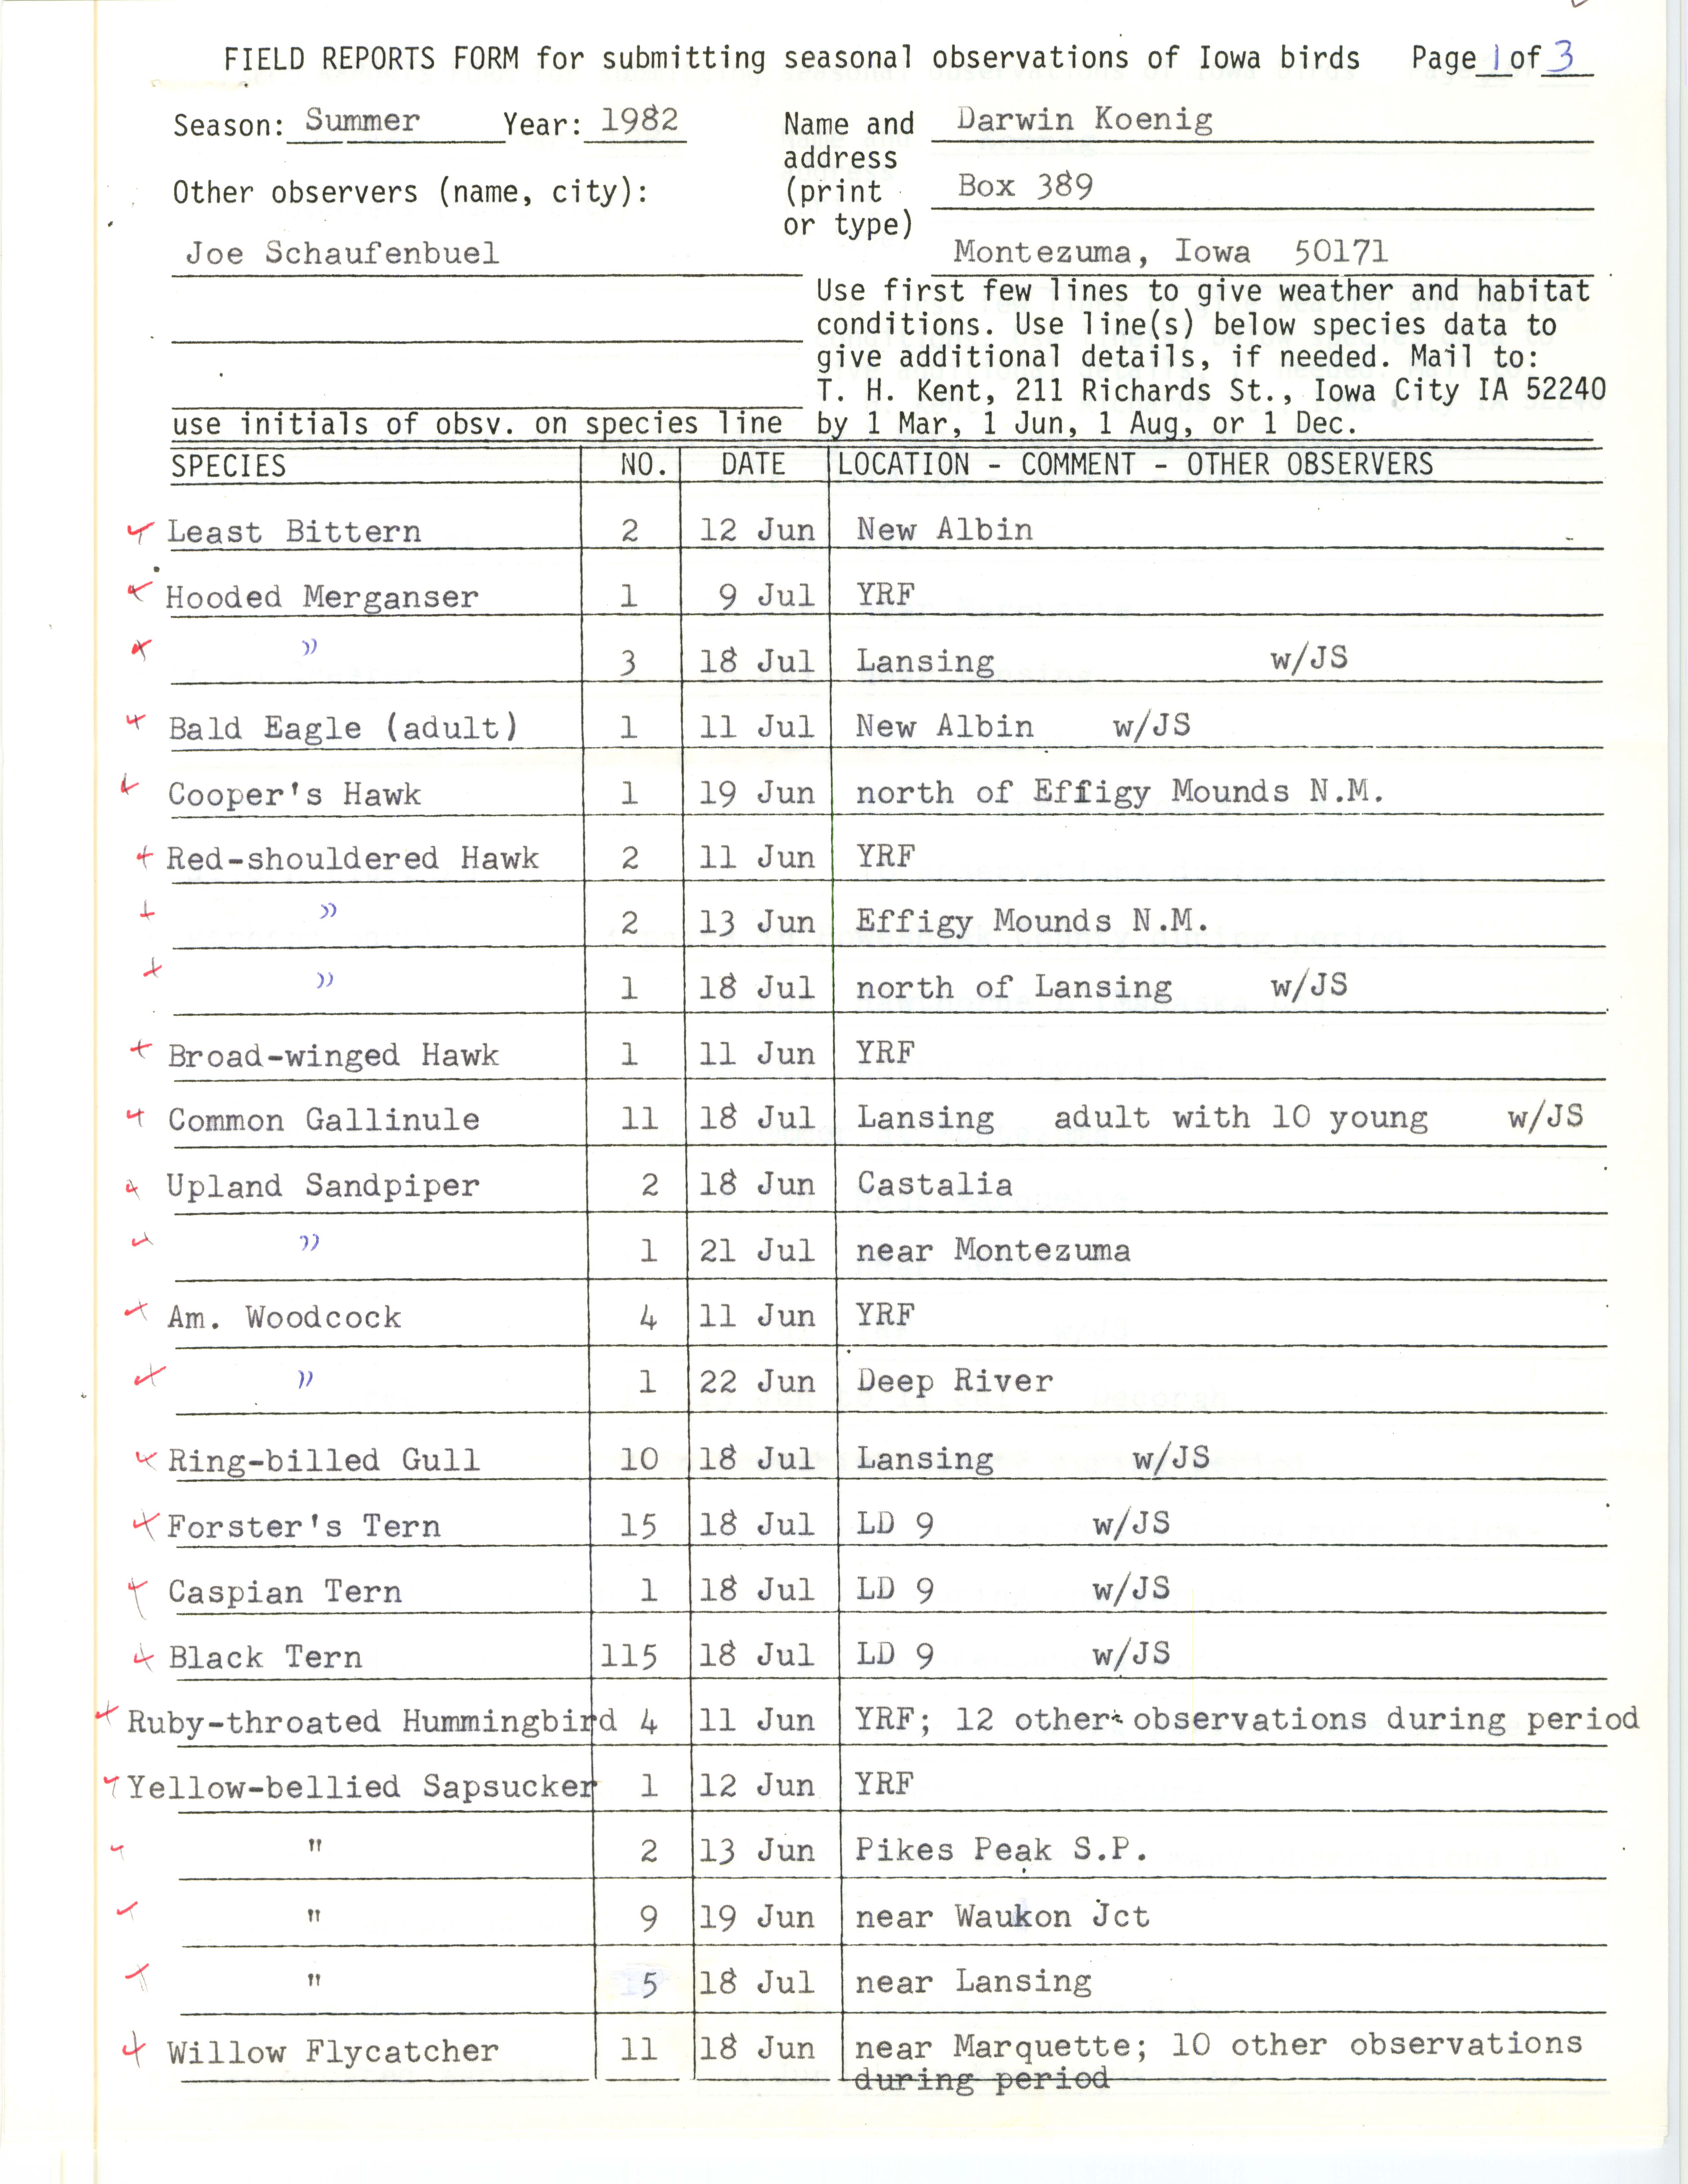 Field report contributed by Darwin Koenig, summer 1982